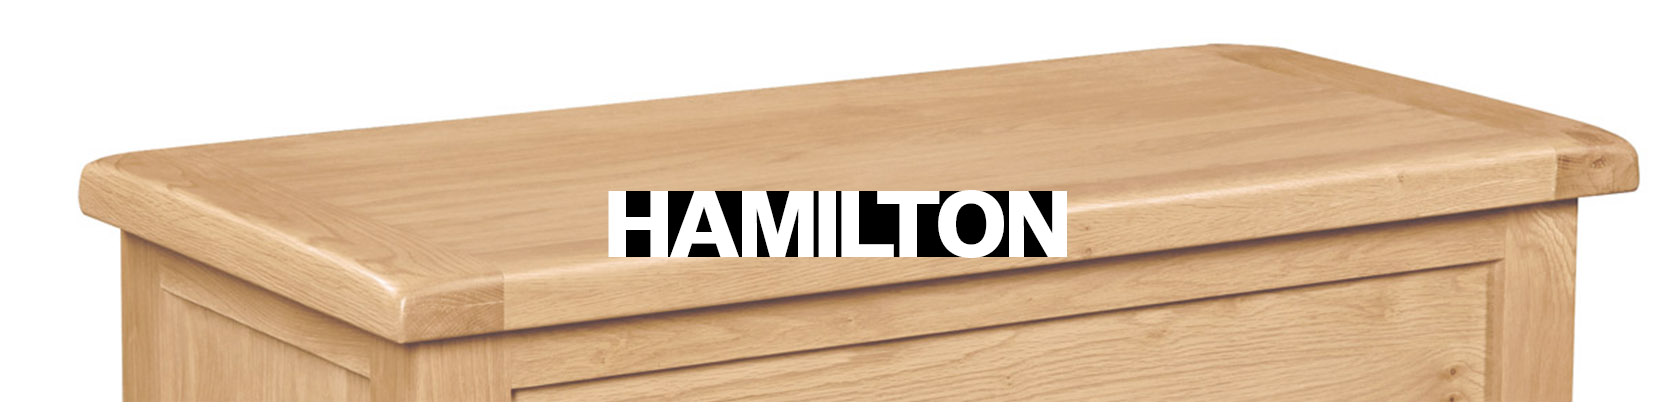 hamilton-category-banner